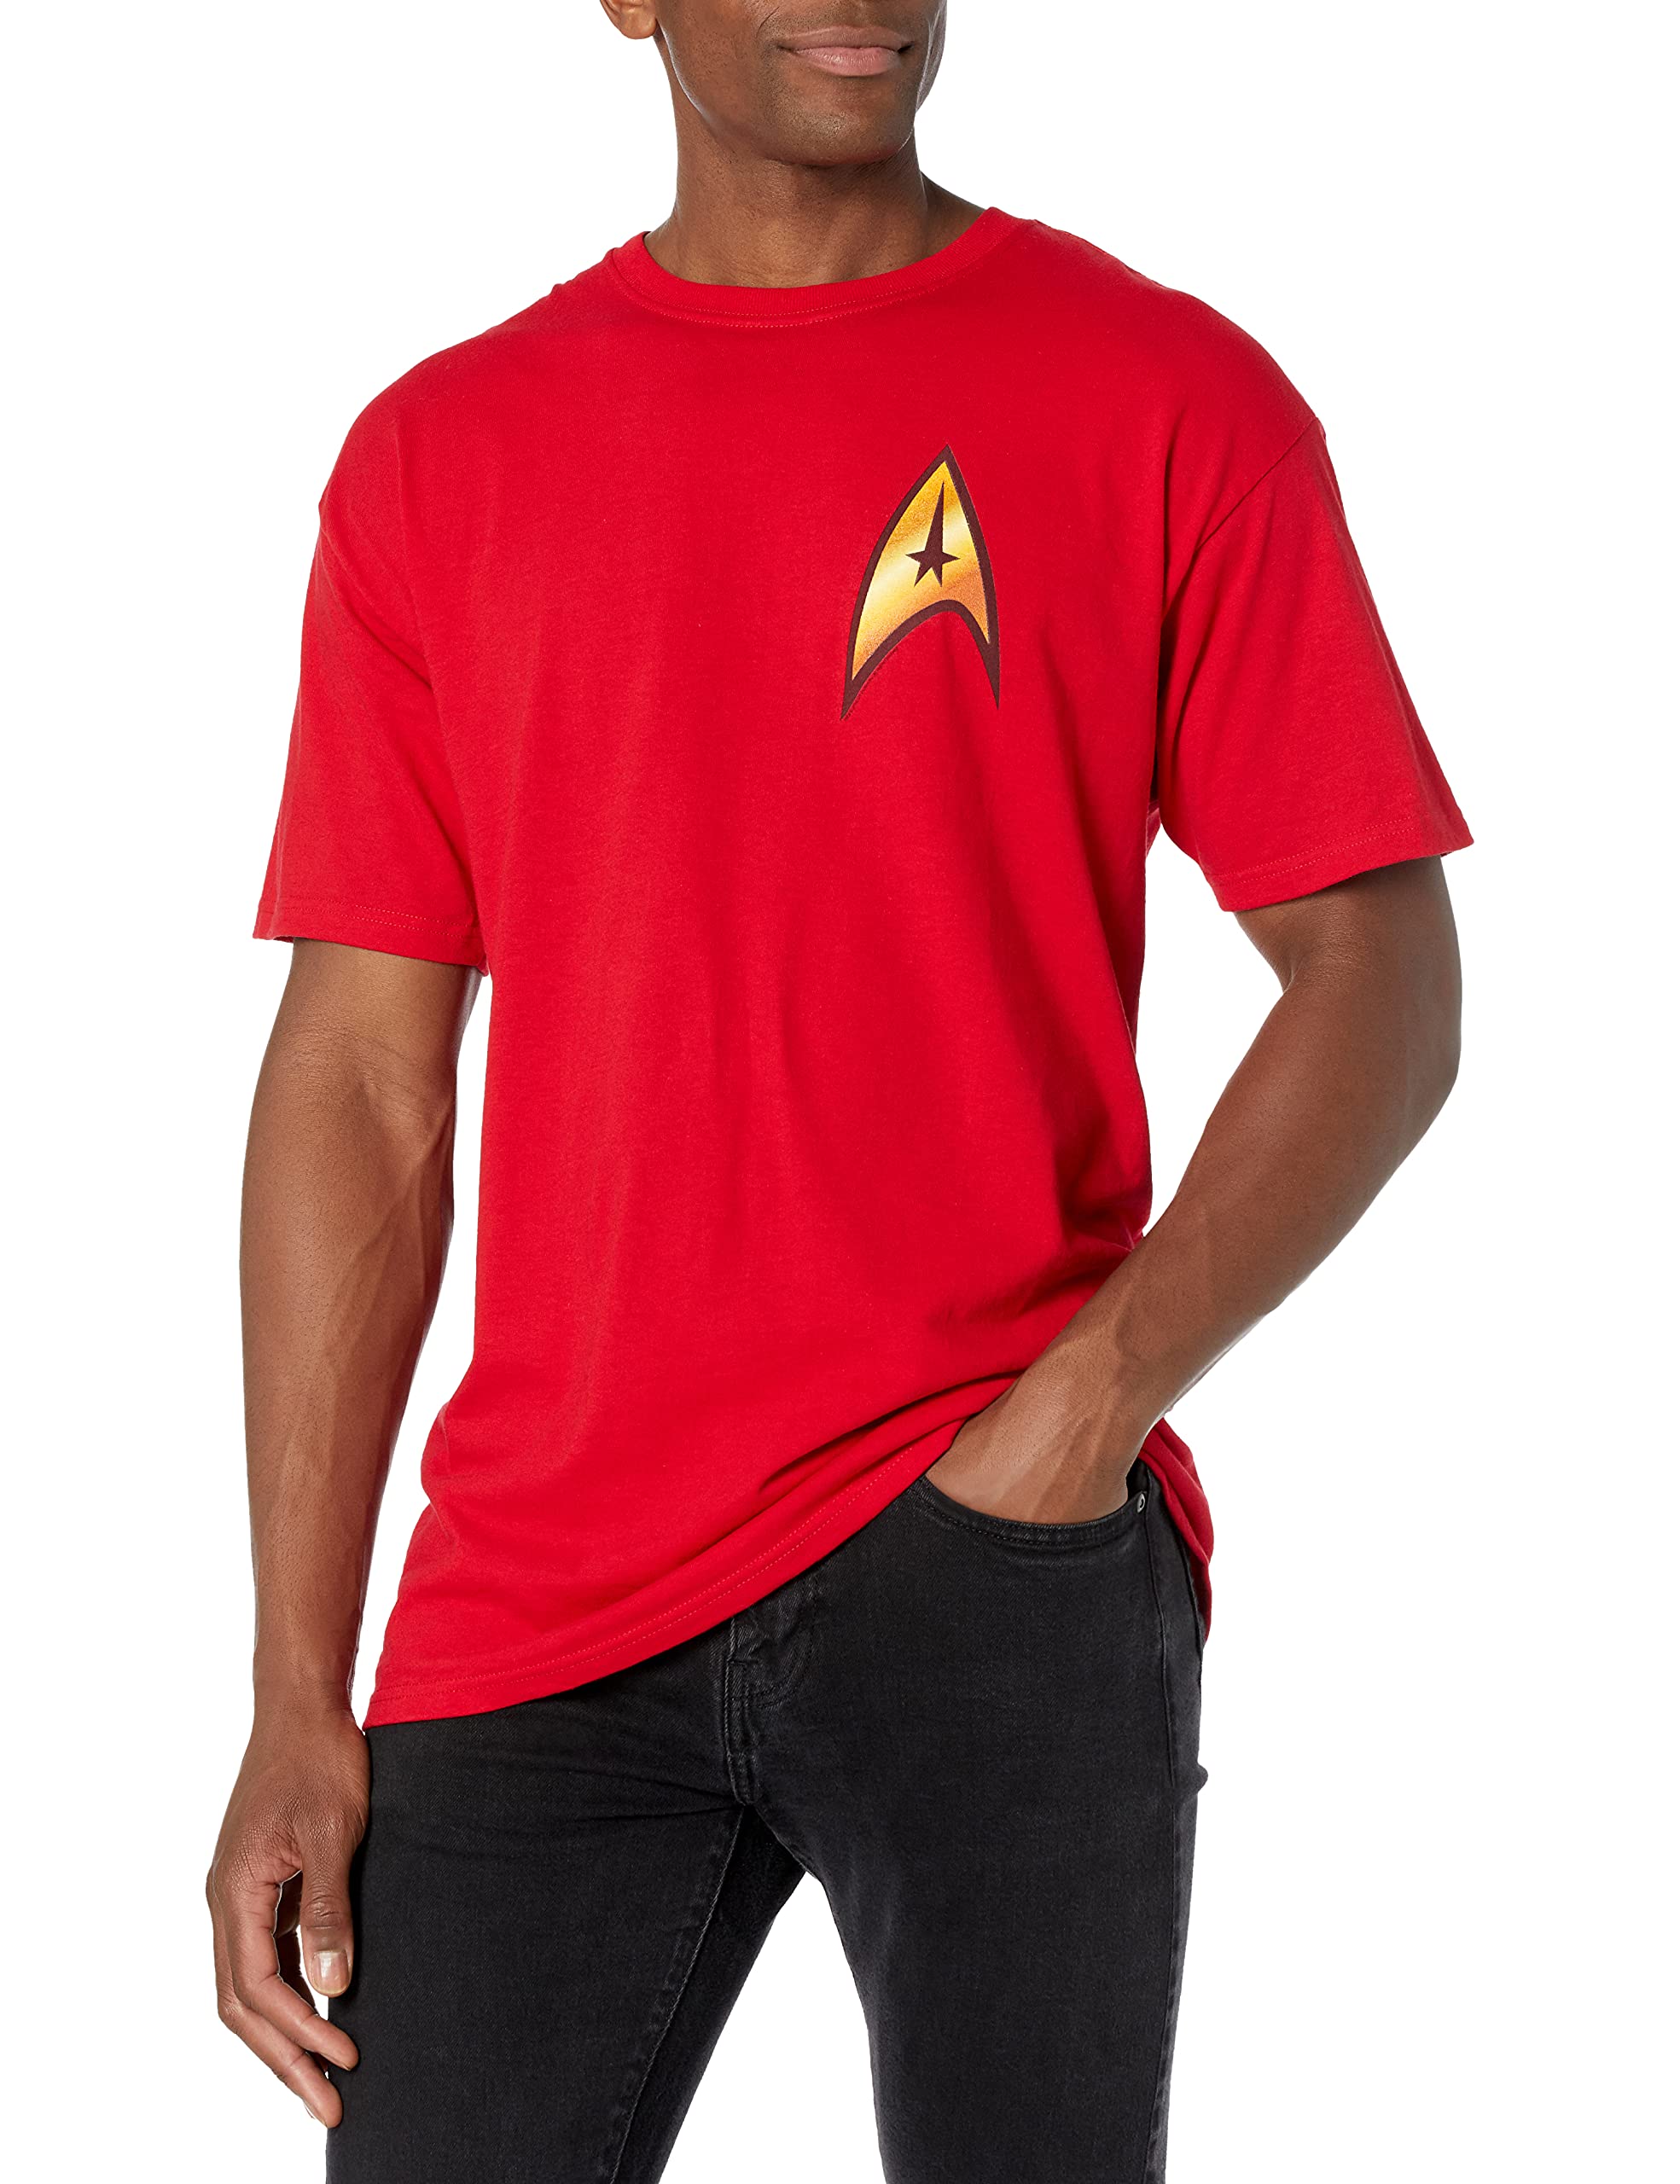 Fifth Sun Star Trek: The Original Series Command Badge T-Shirt